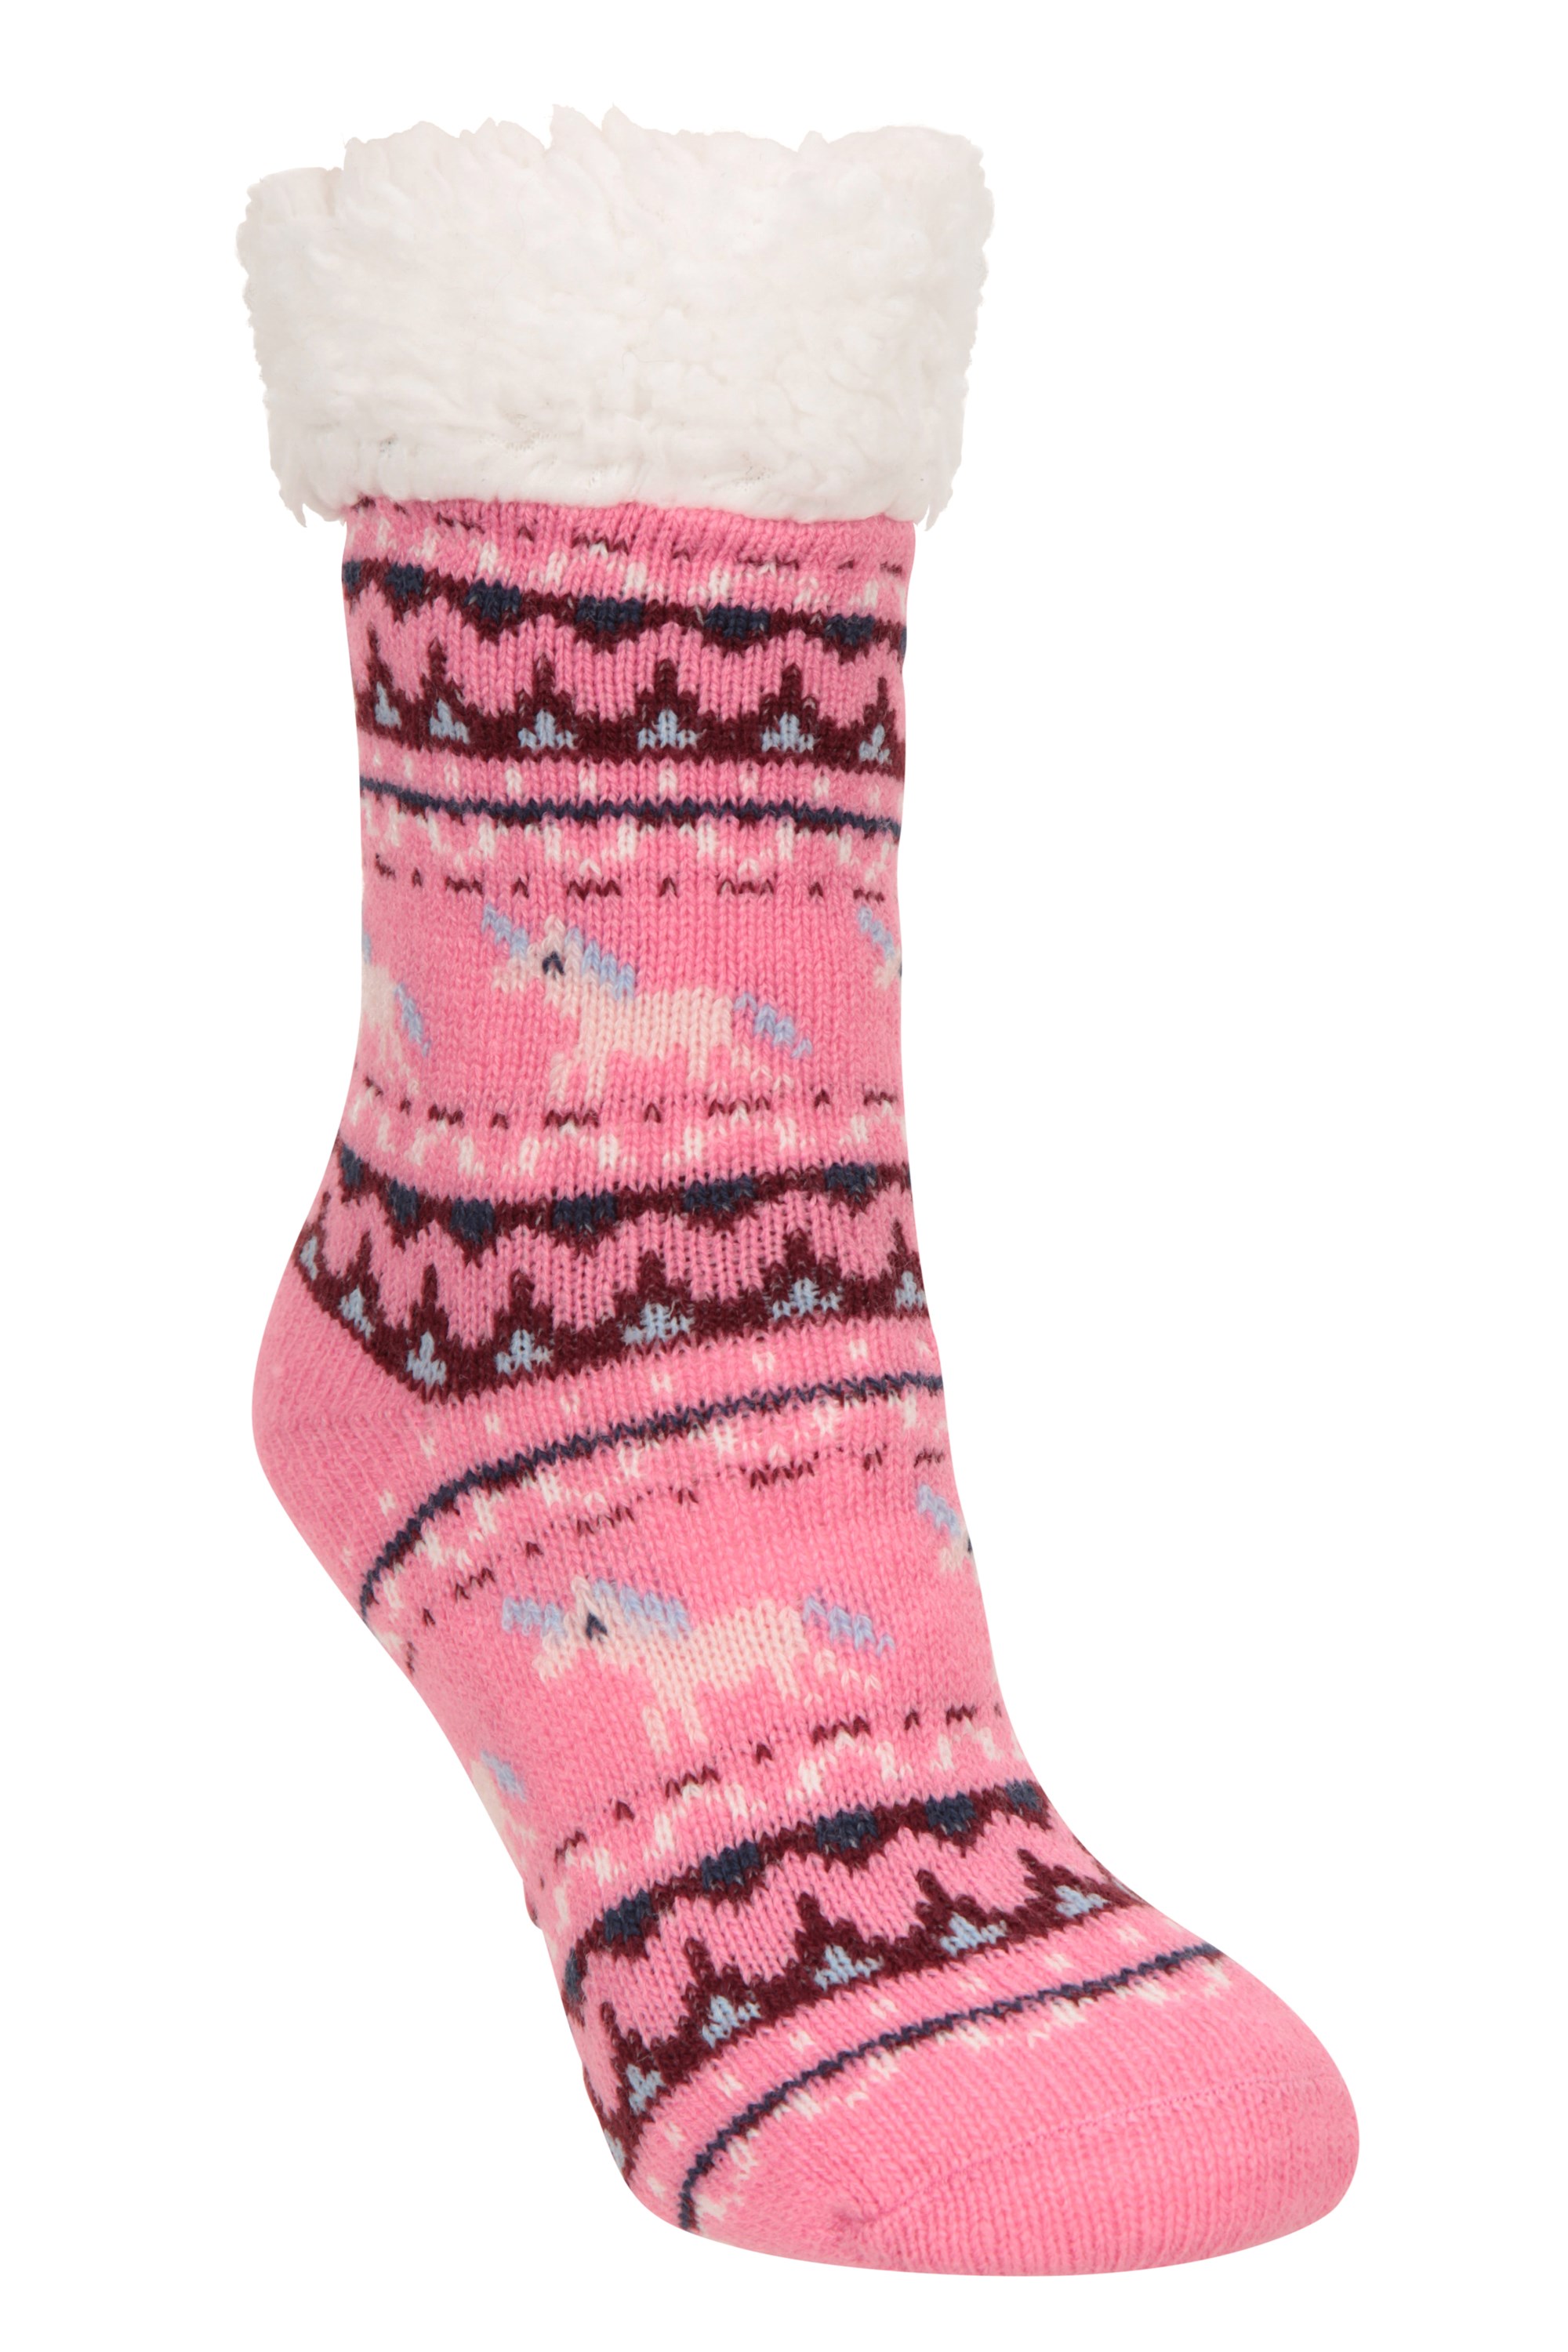 Kids Unicorn Slipper Socks - Pink